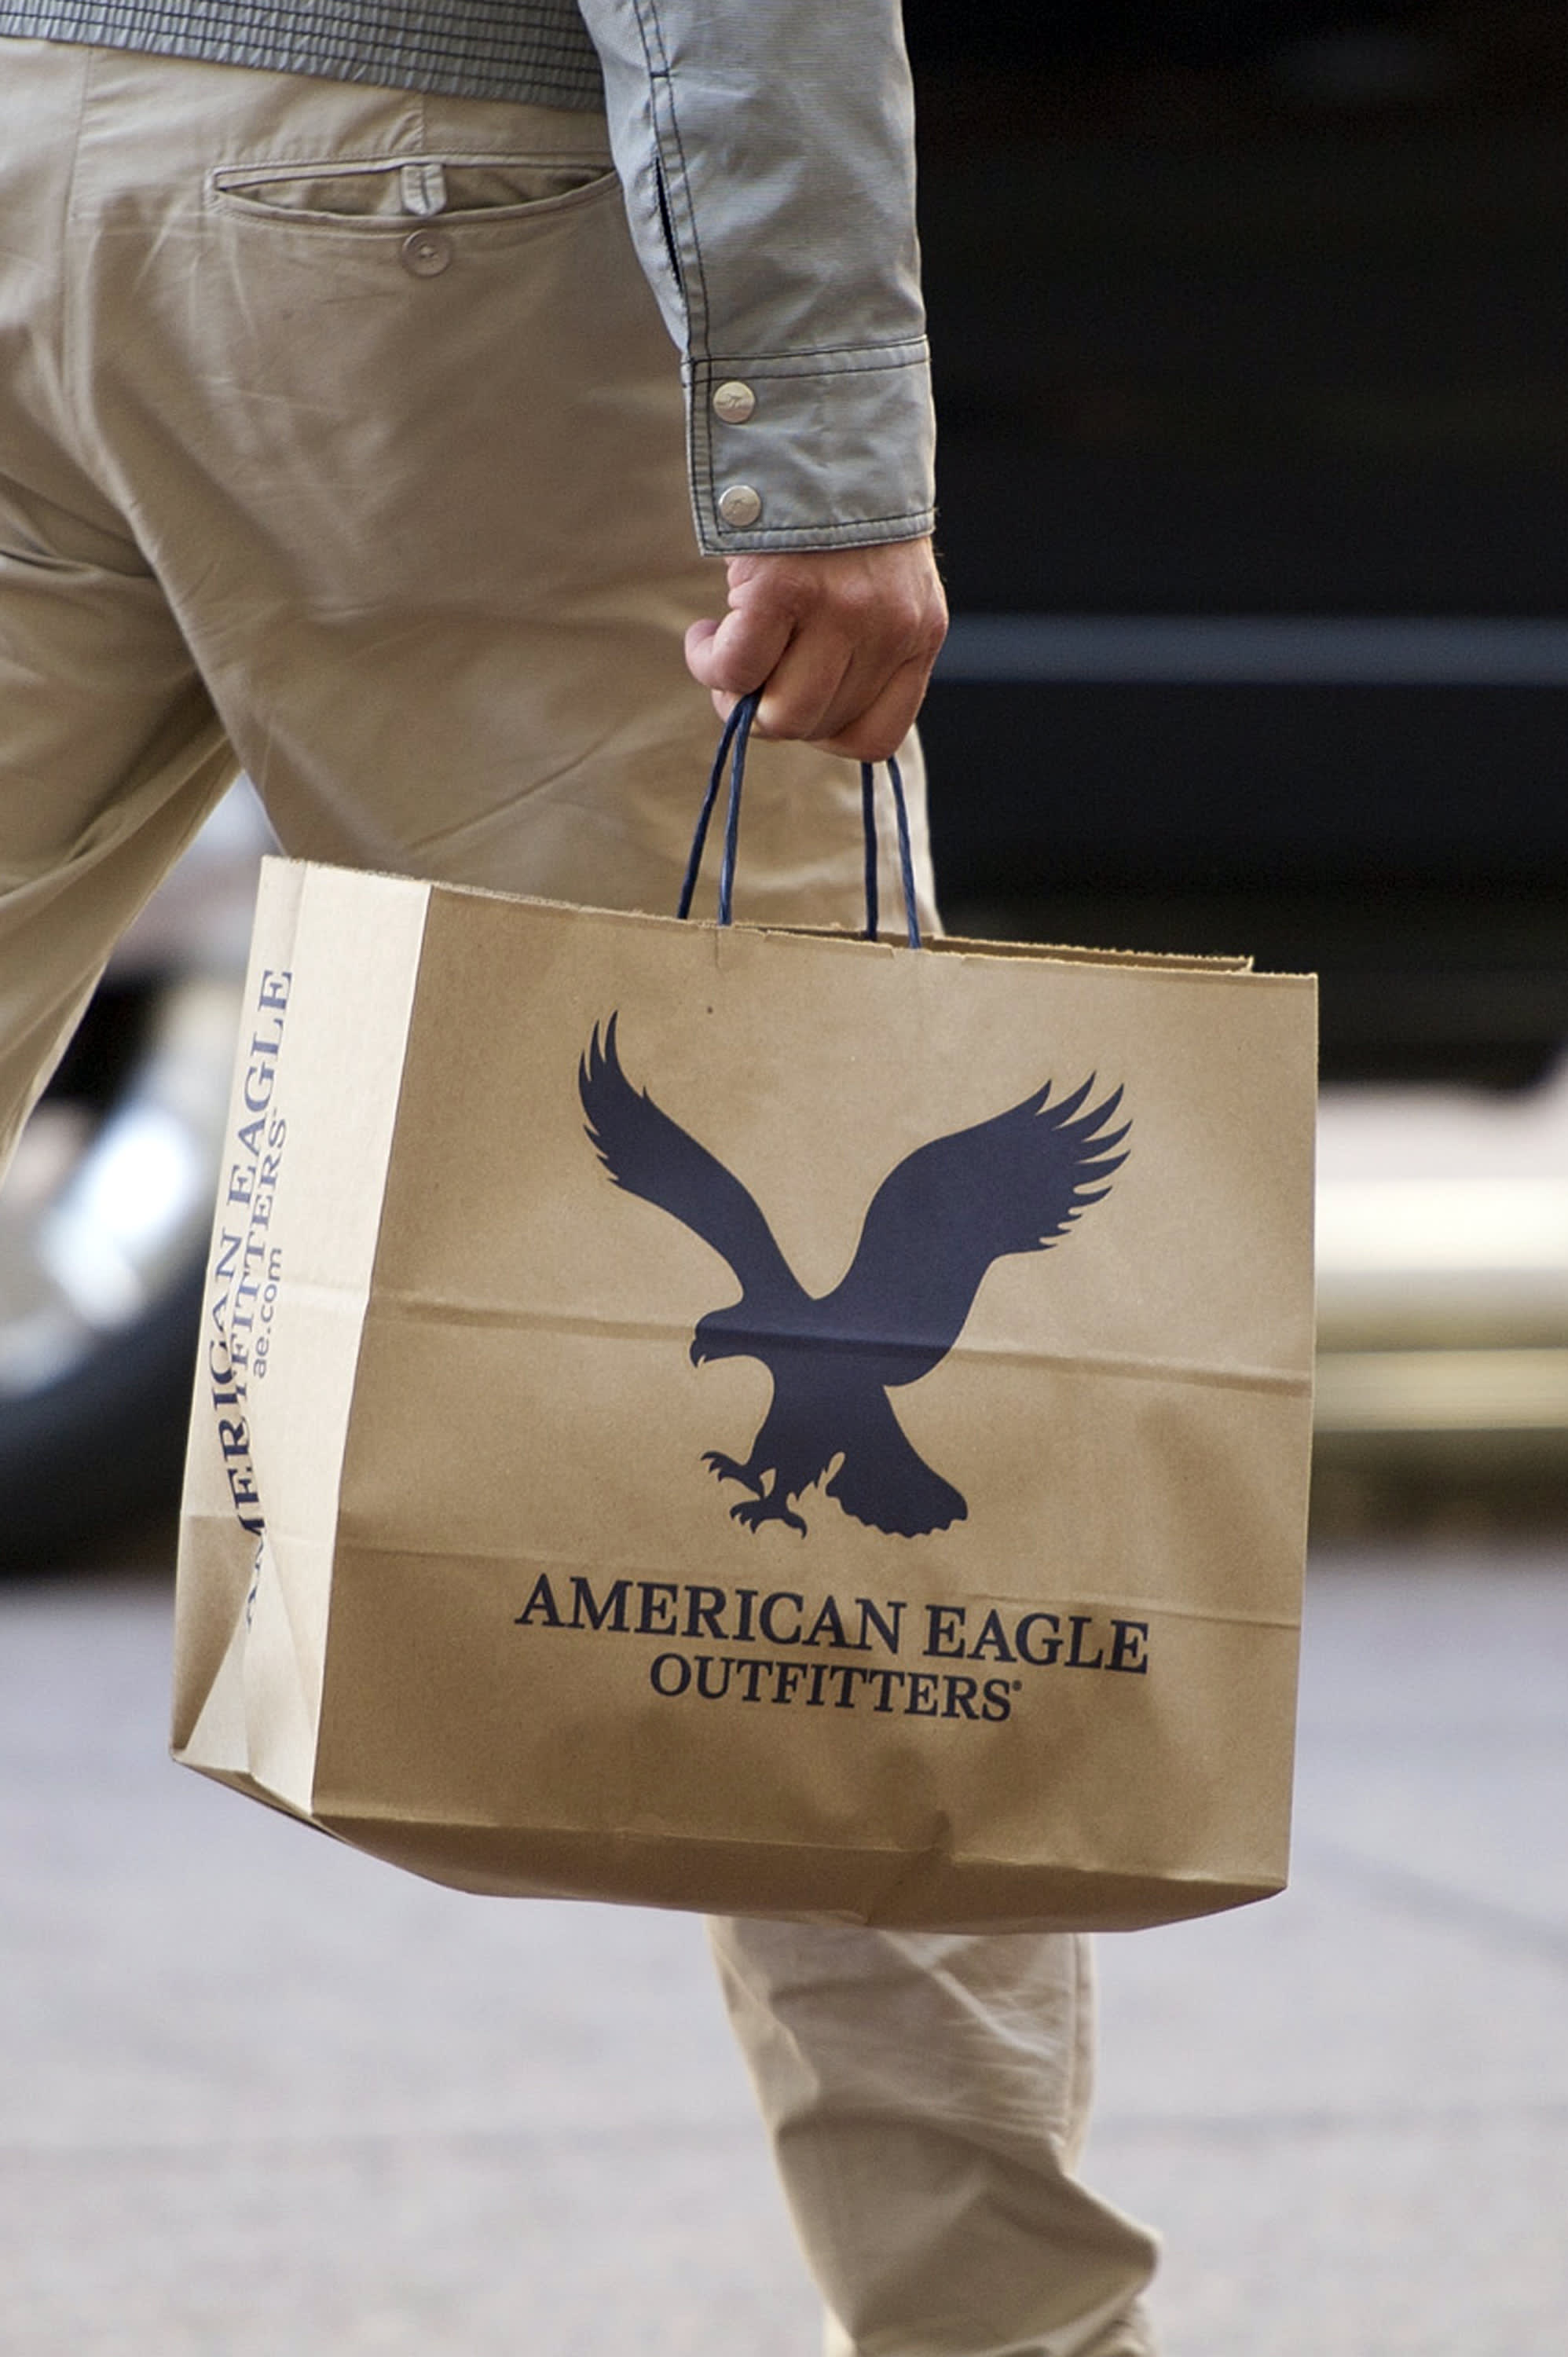 Американ игл. American Eagle Outfitters. American Eagle одежда. American Eagle Outfitters одежда.